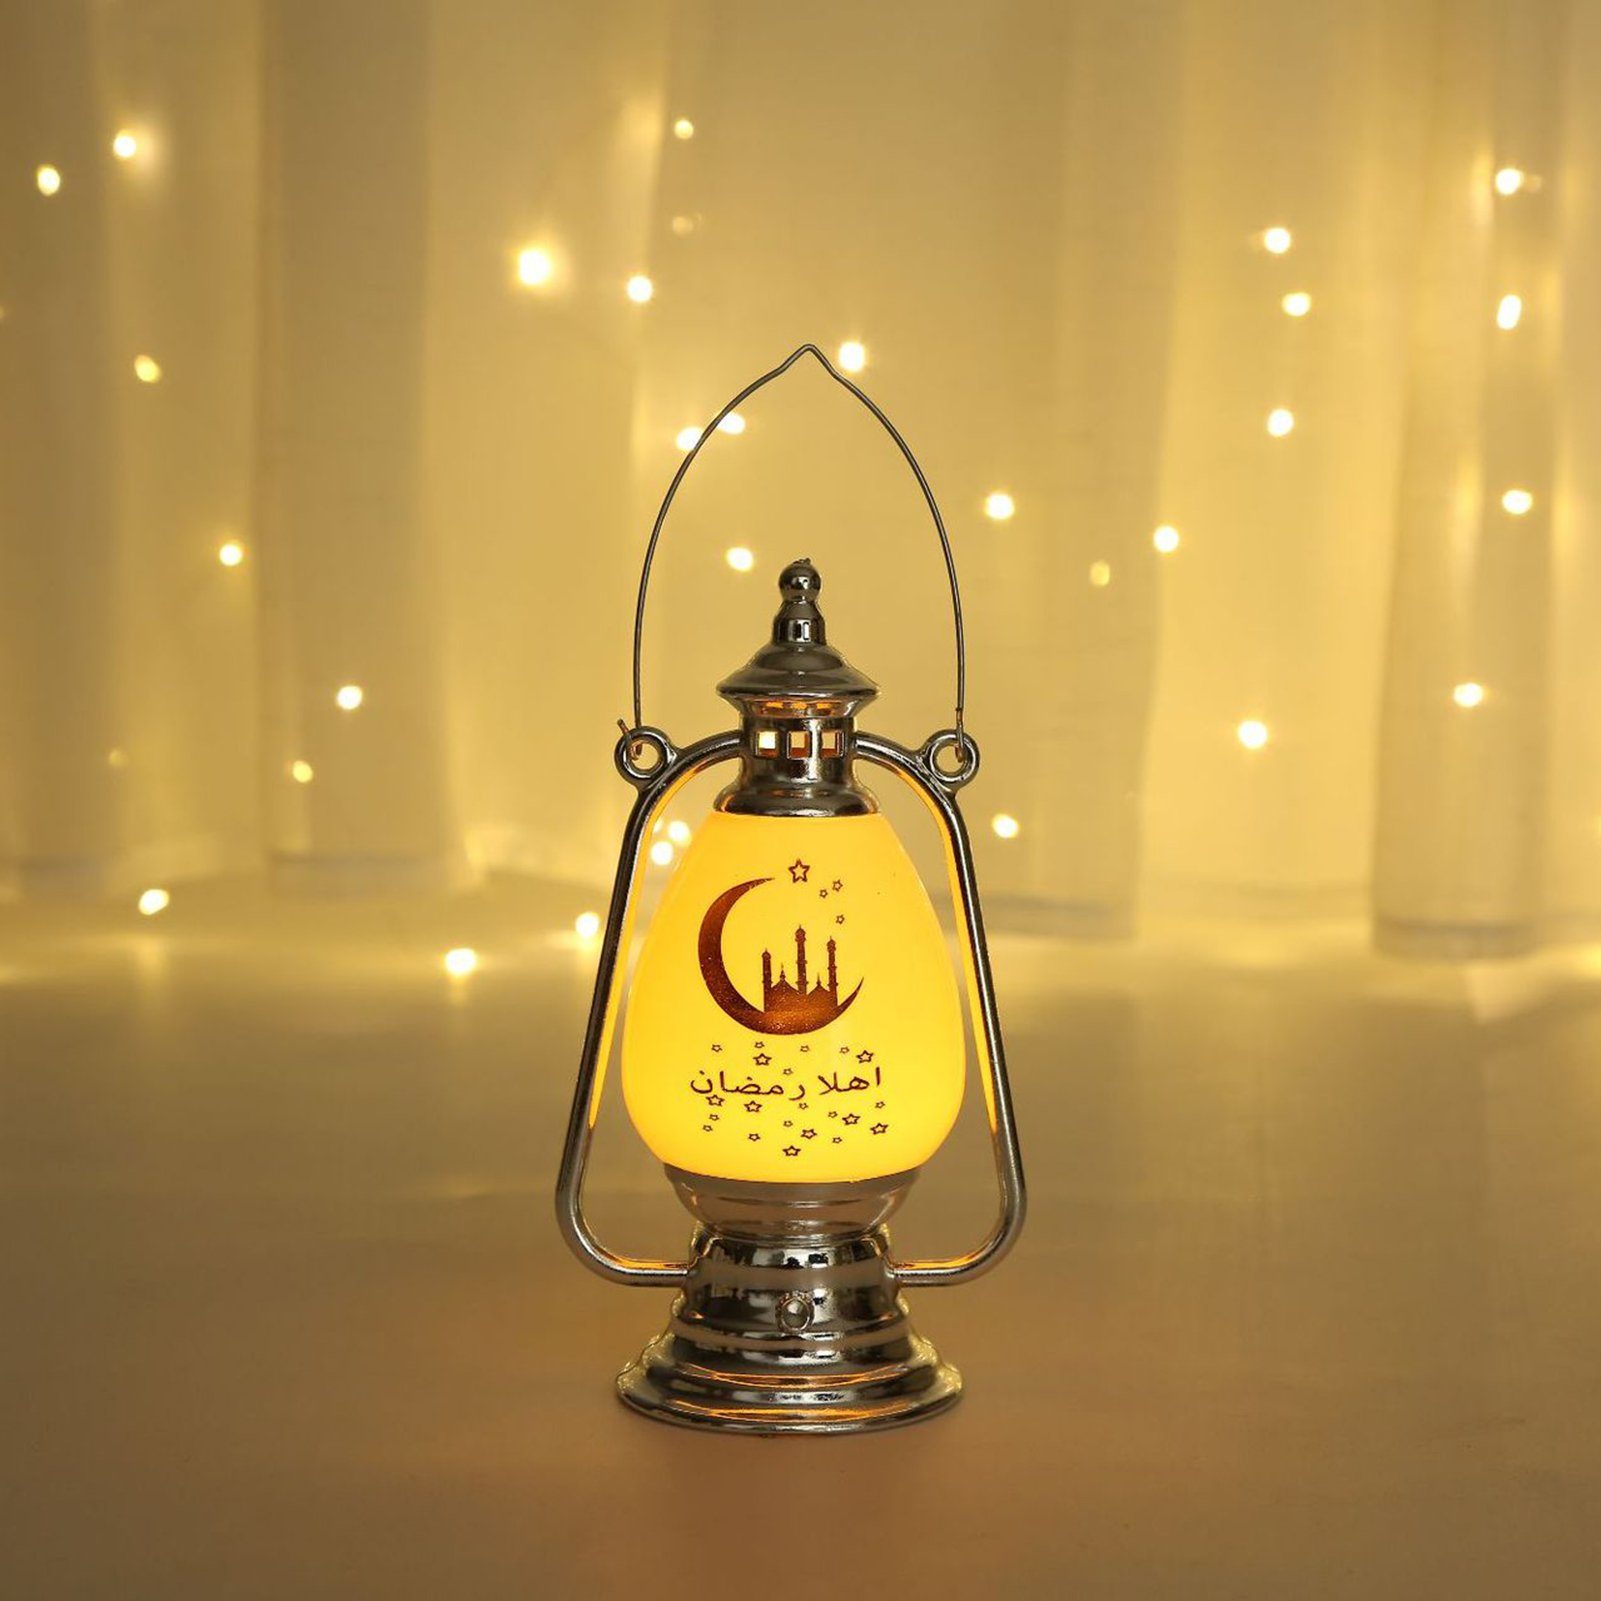 Rutaqian LED-Leuchte Ramadan Dekoration Laterne Eid Mubarak Deko  (Elektronische Kerze Ramadan Deko LampeVintage Laterne Deko, Kunsthandwerk,  Laterne im arabischen Stil)